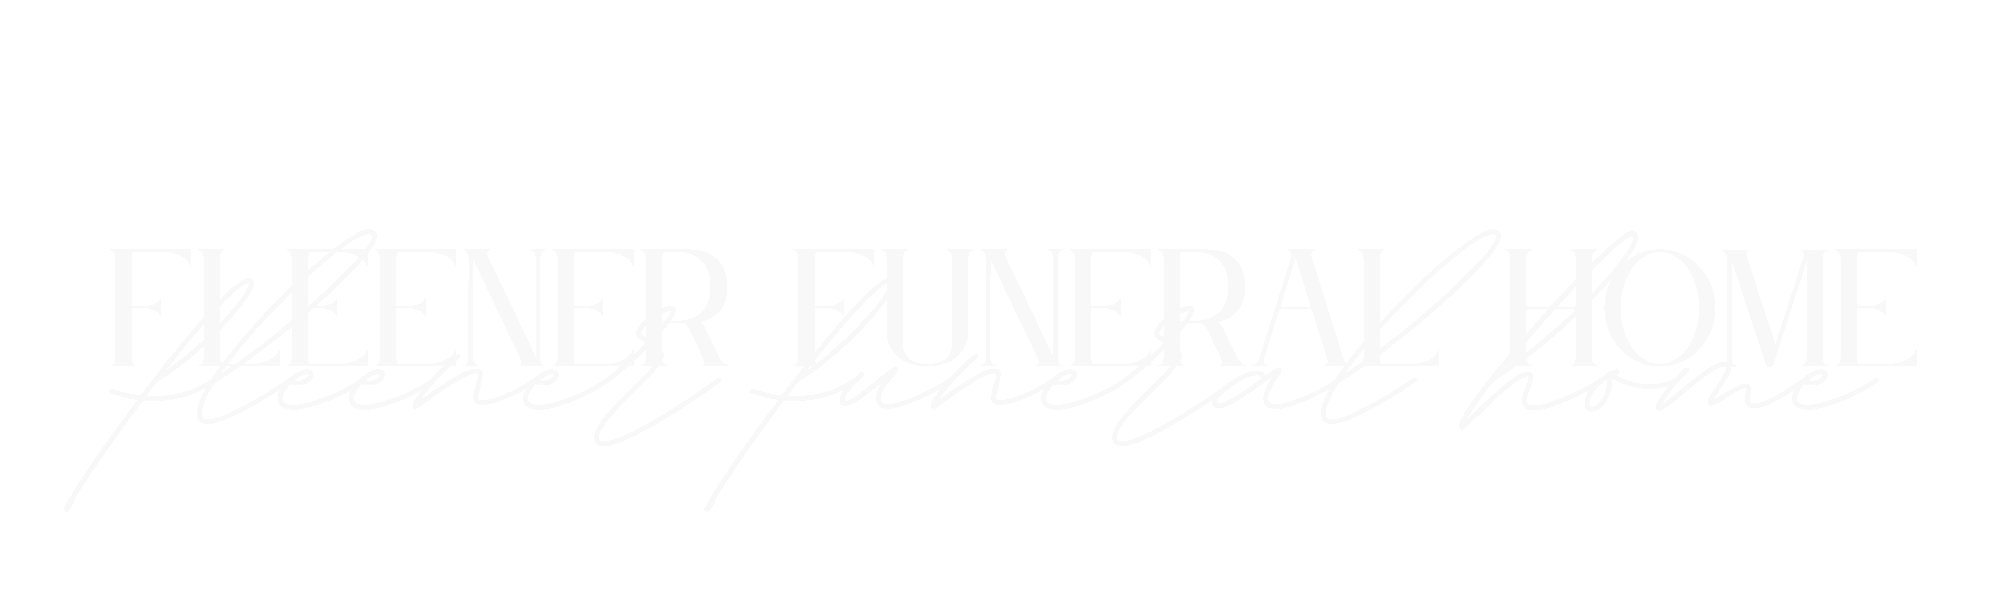 Fleener Funeral Home Logo